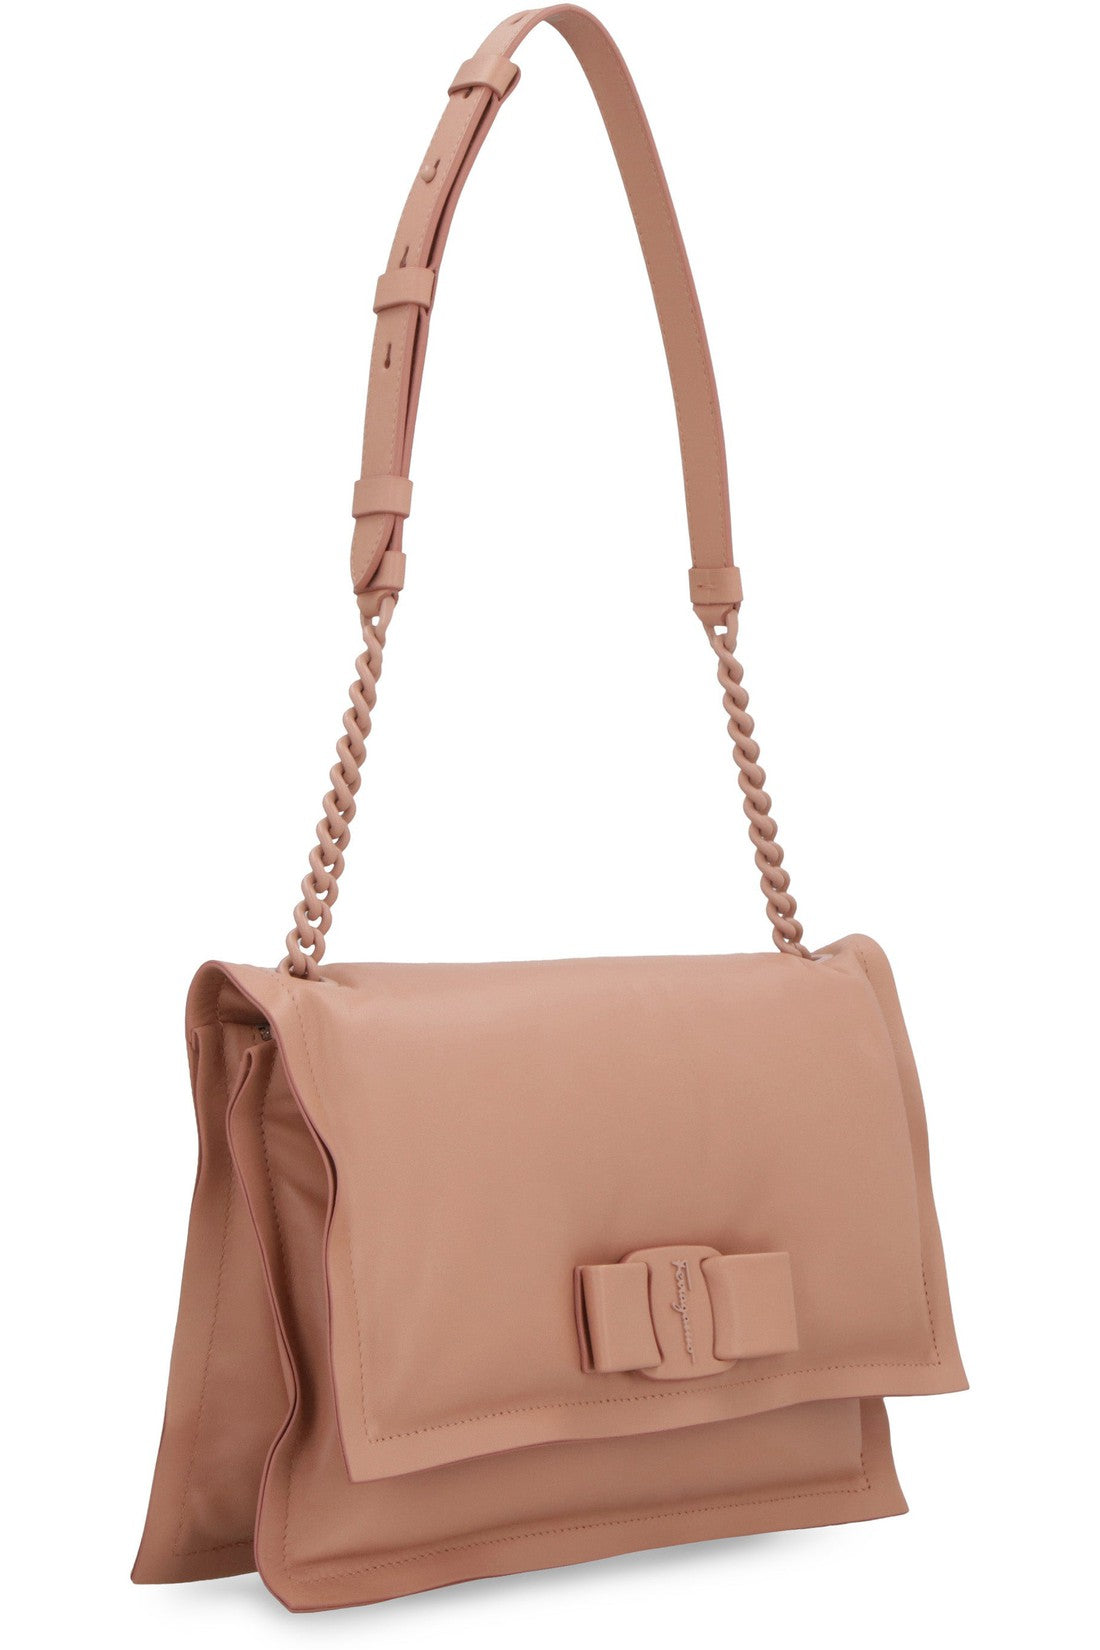 FERRAGAMO-OUTLET-SALE-Viva Bow leather shoulder bag-ARCHIVIST